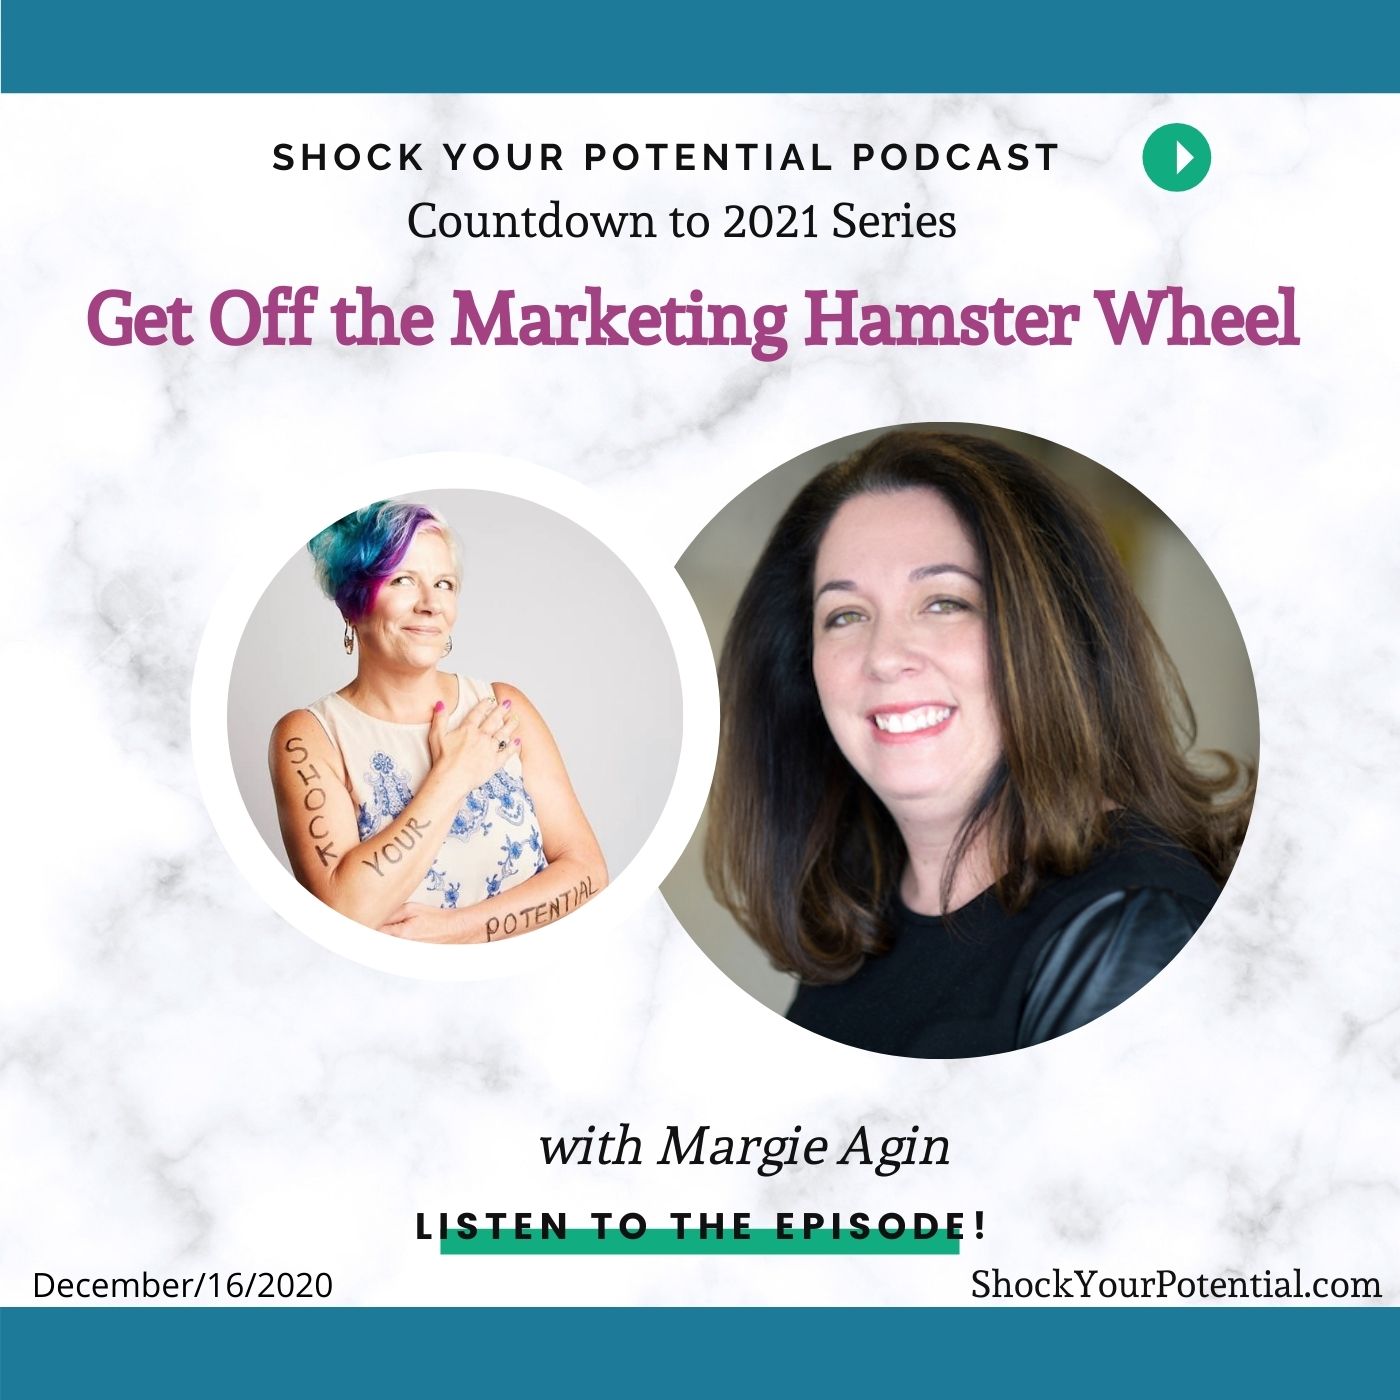 Get Off the Marketing Hamster Wheel – Margie Agin